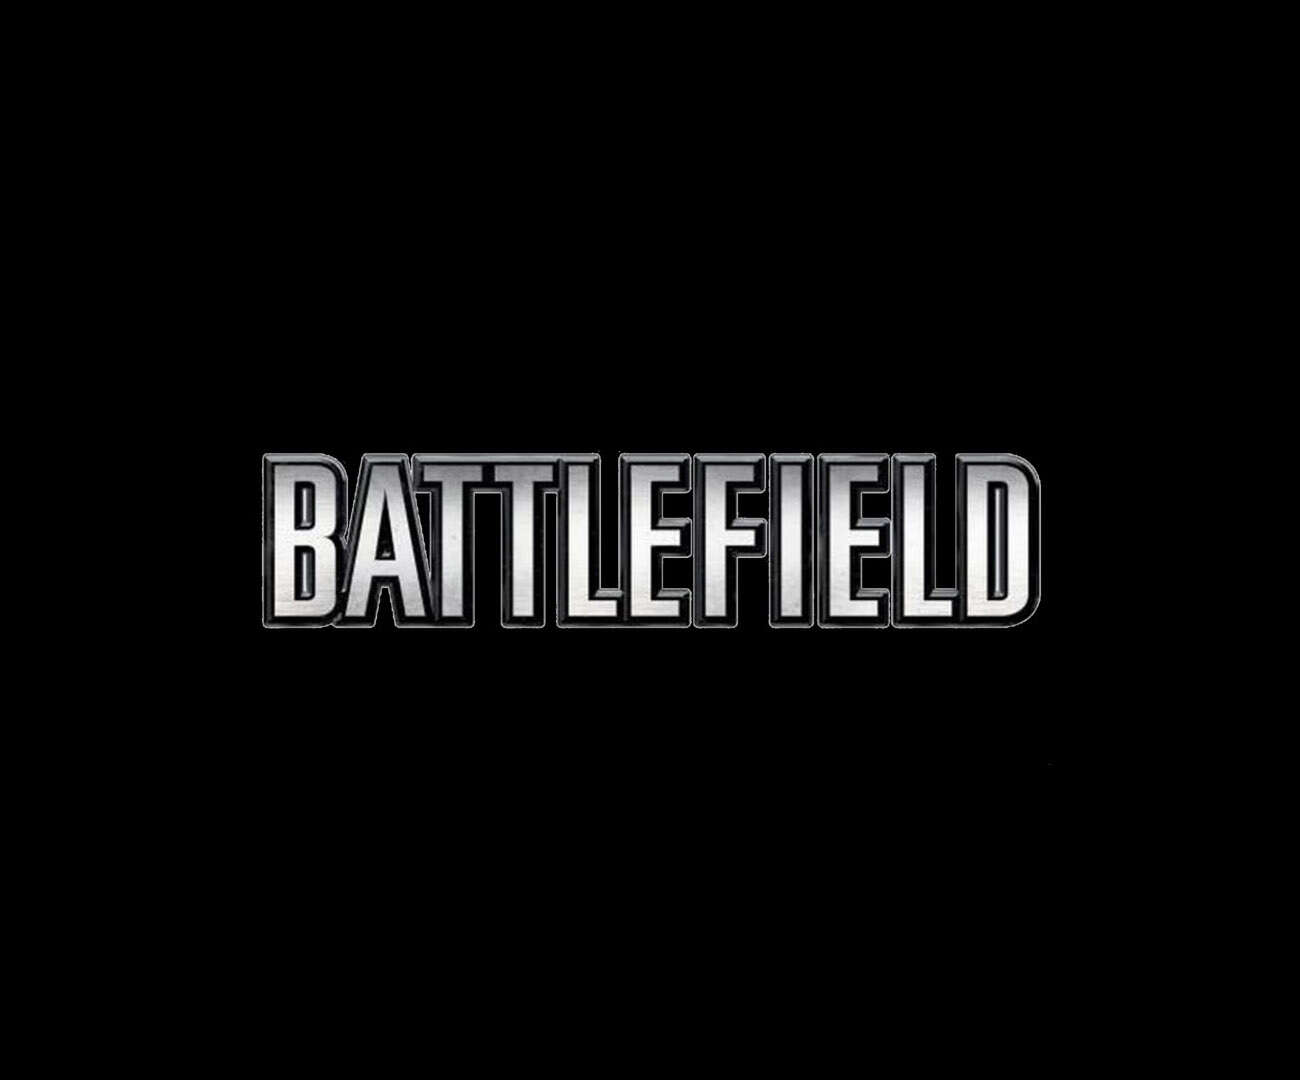 battlefield